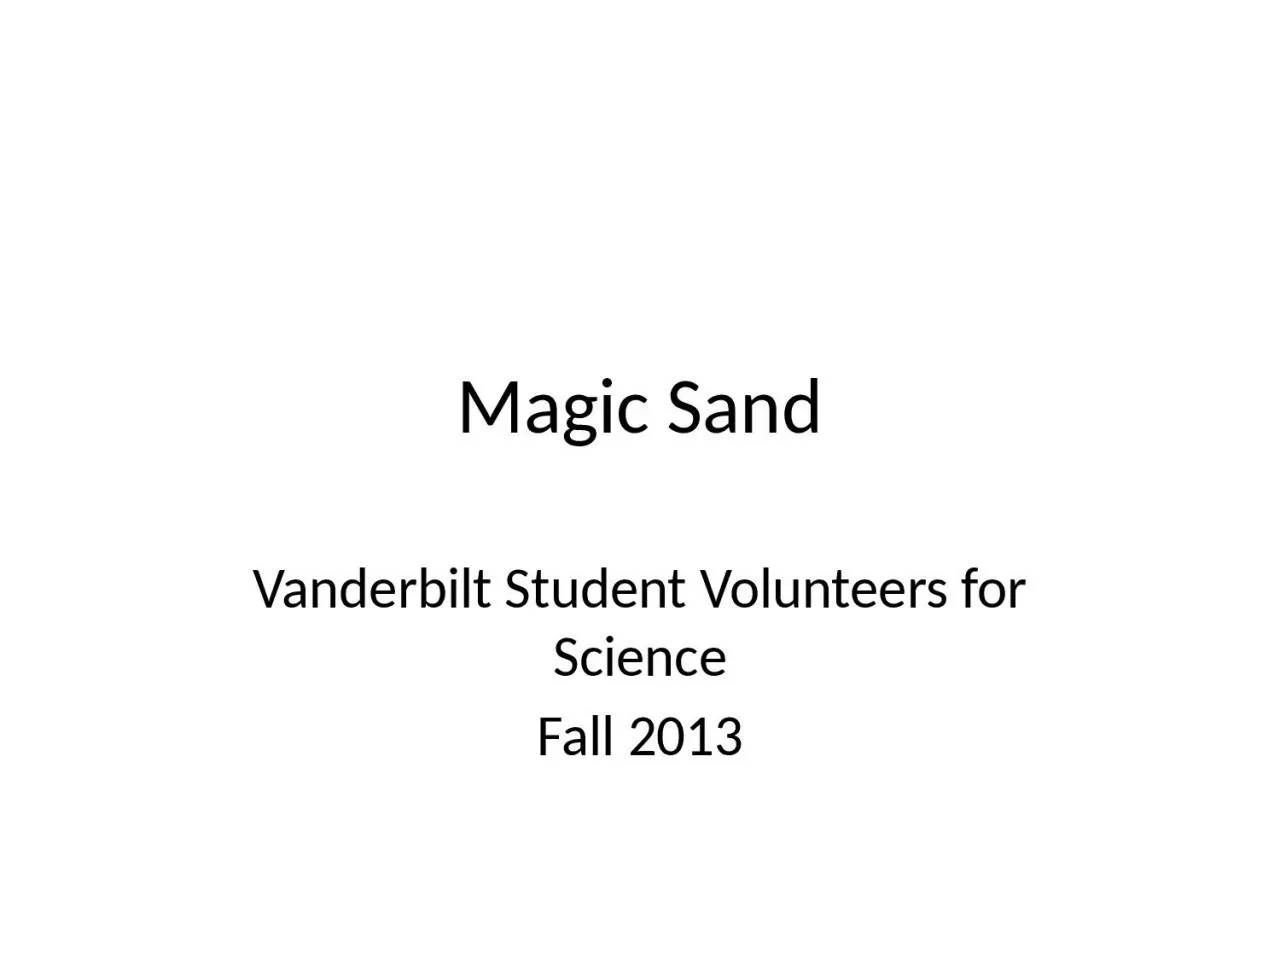 Magic Sand Vanderbilt Student Volunteers for Science